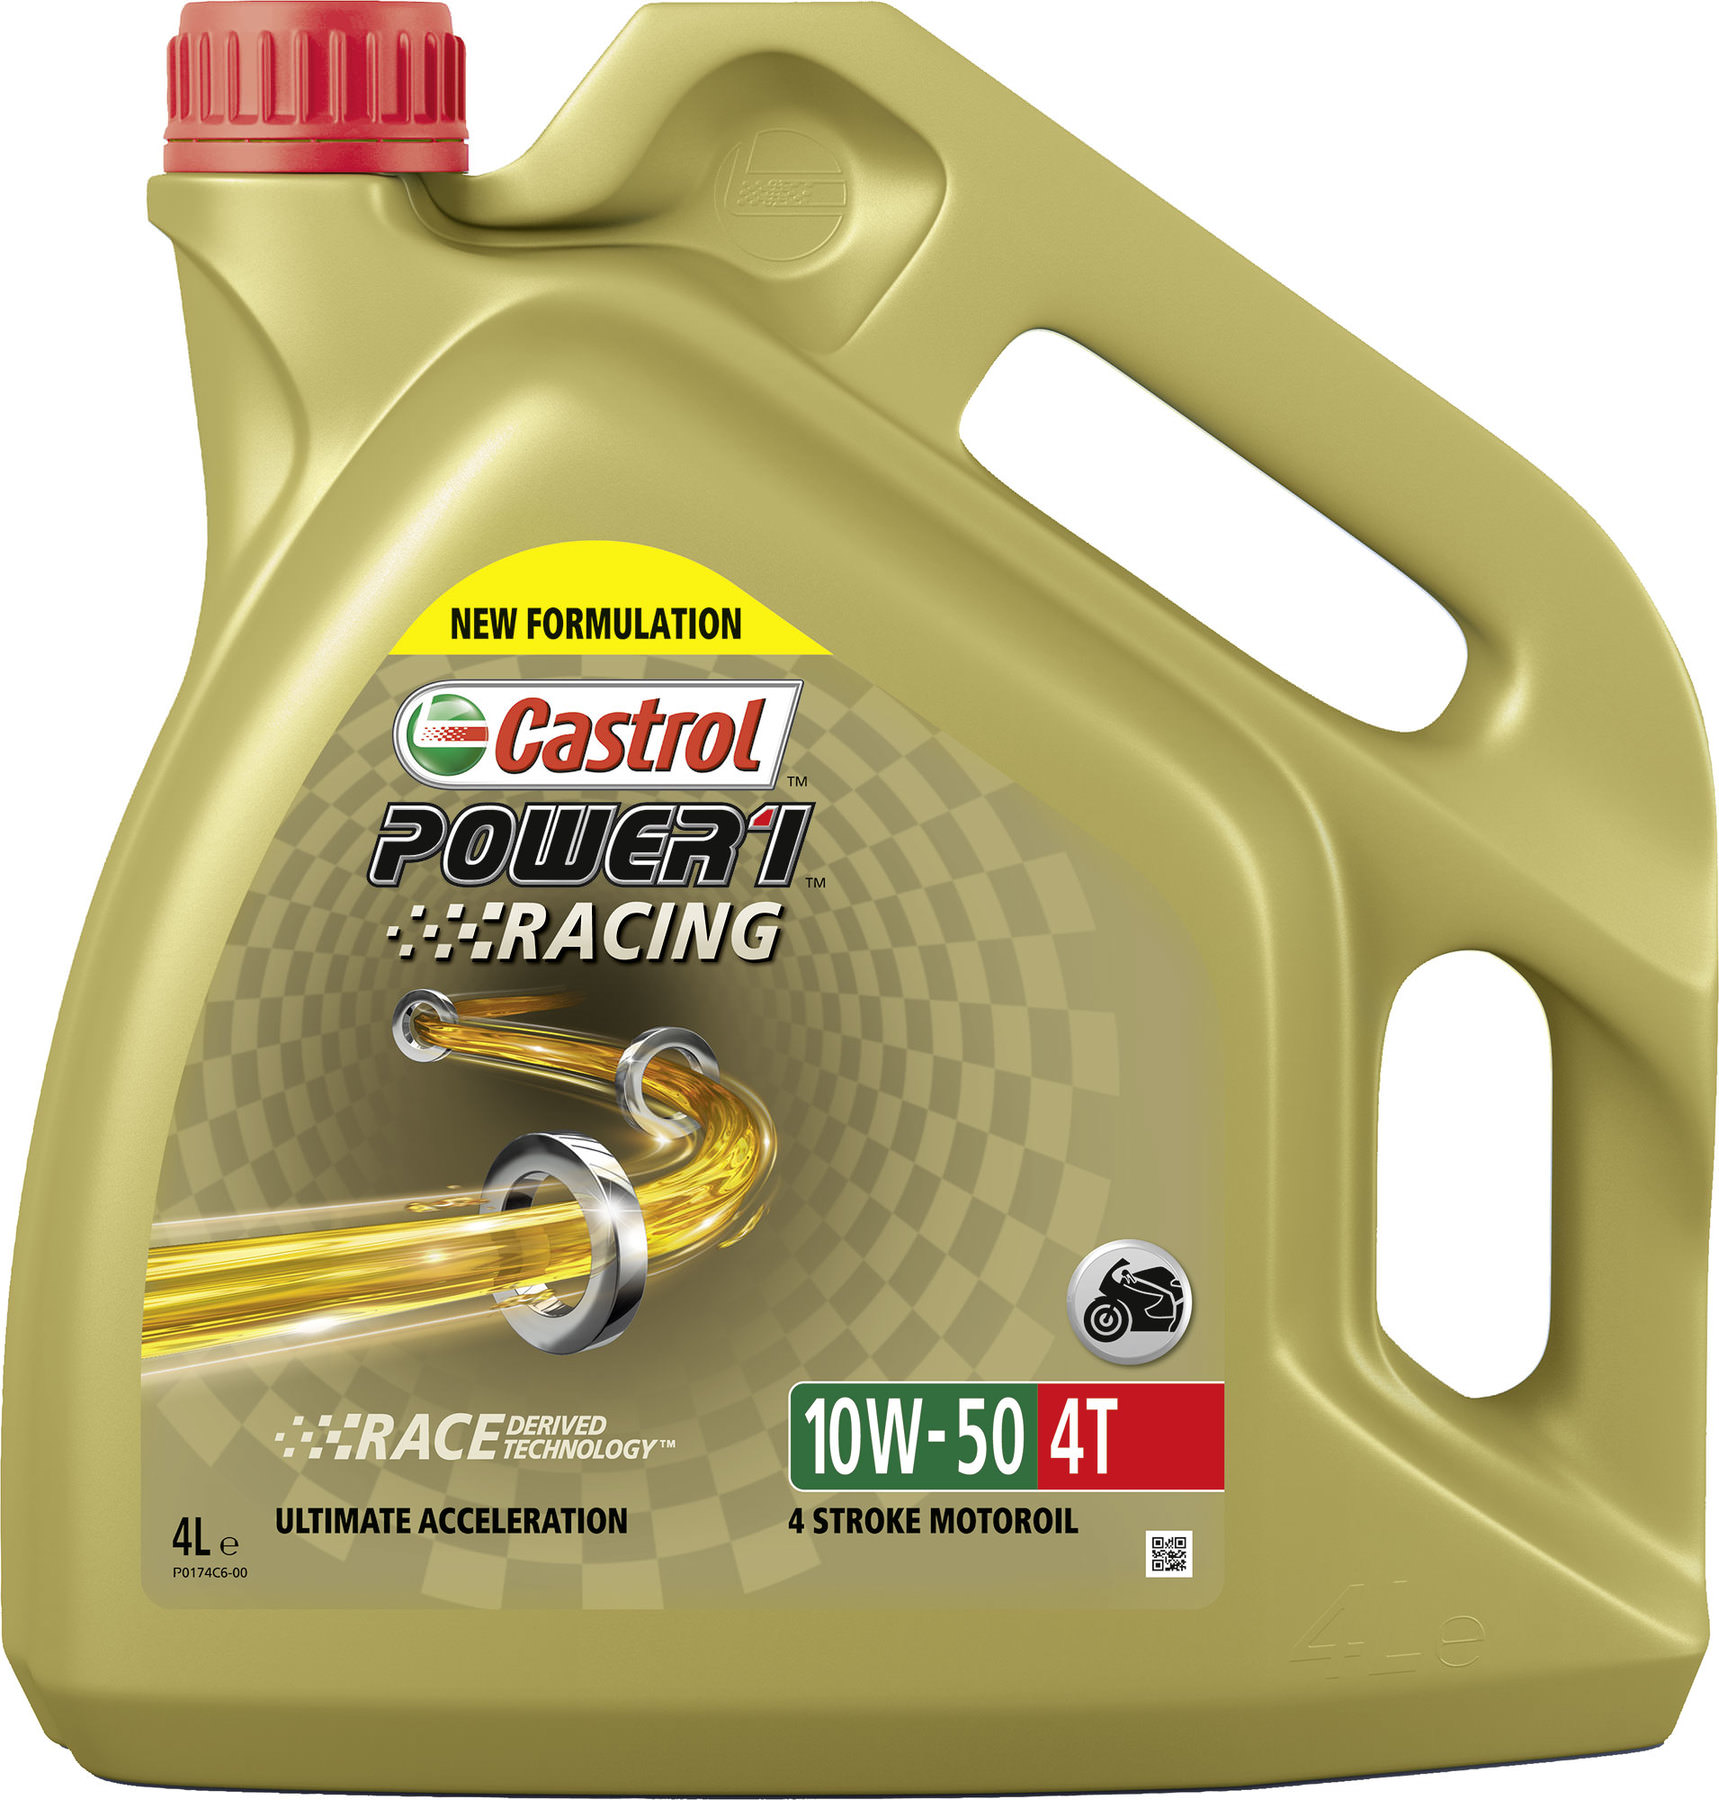 Castrol Castrol Power1 Racing 10W-50 HC-Synthetic, 4T Engine Oil